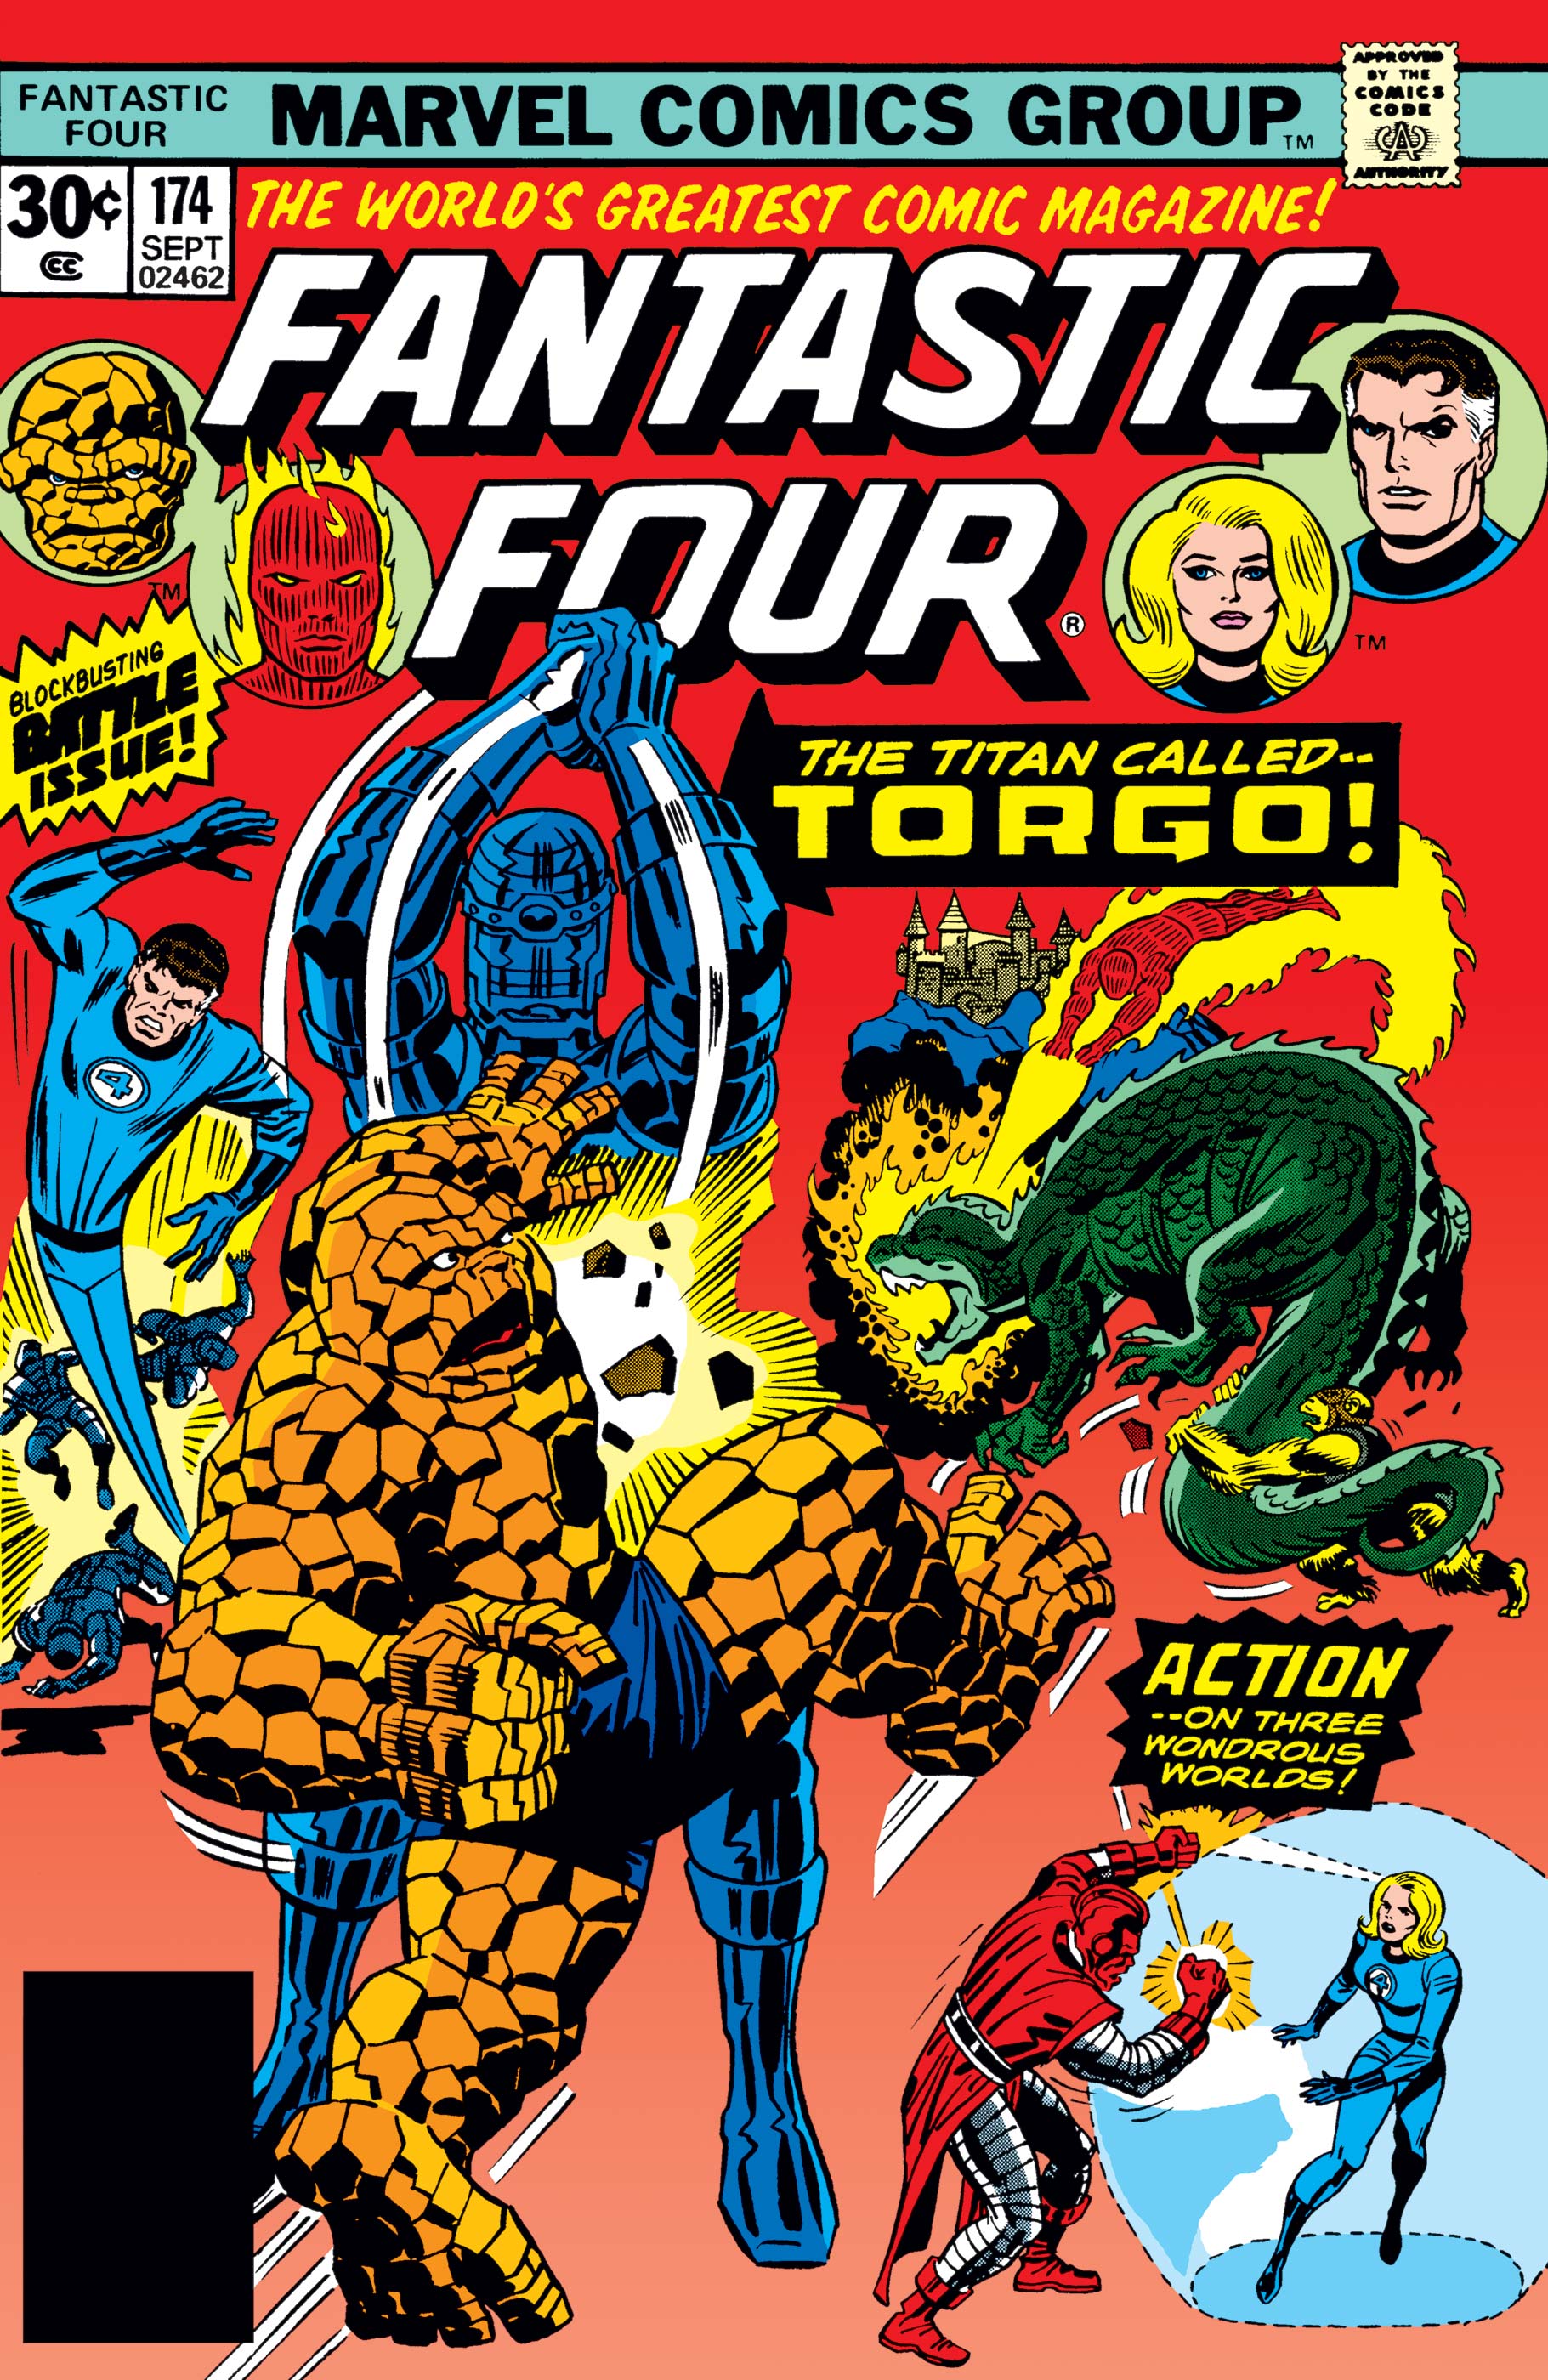 Fantastic Four (1961) #174